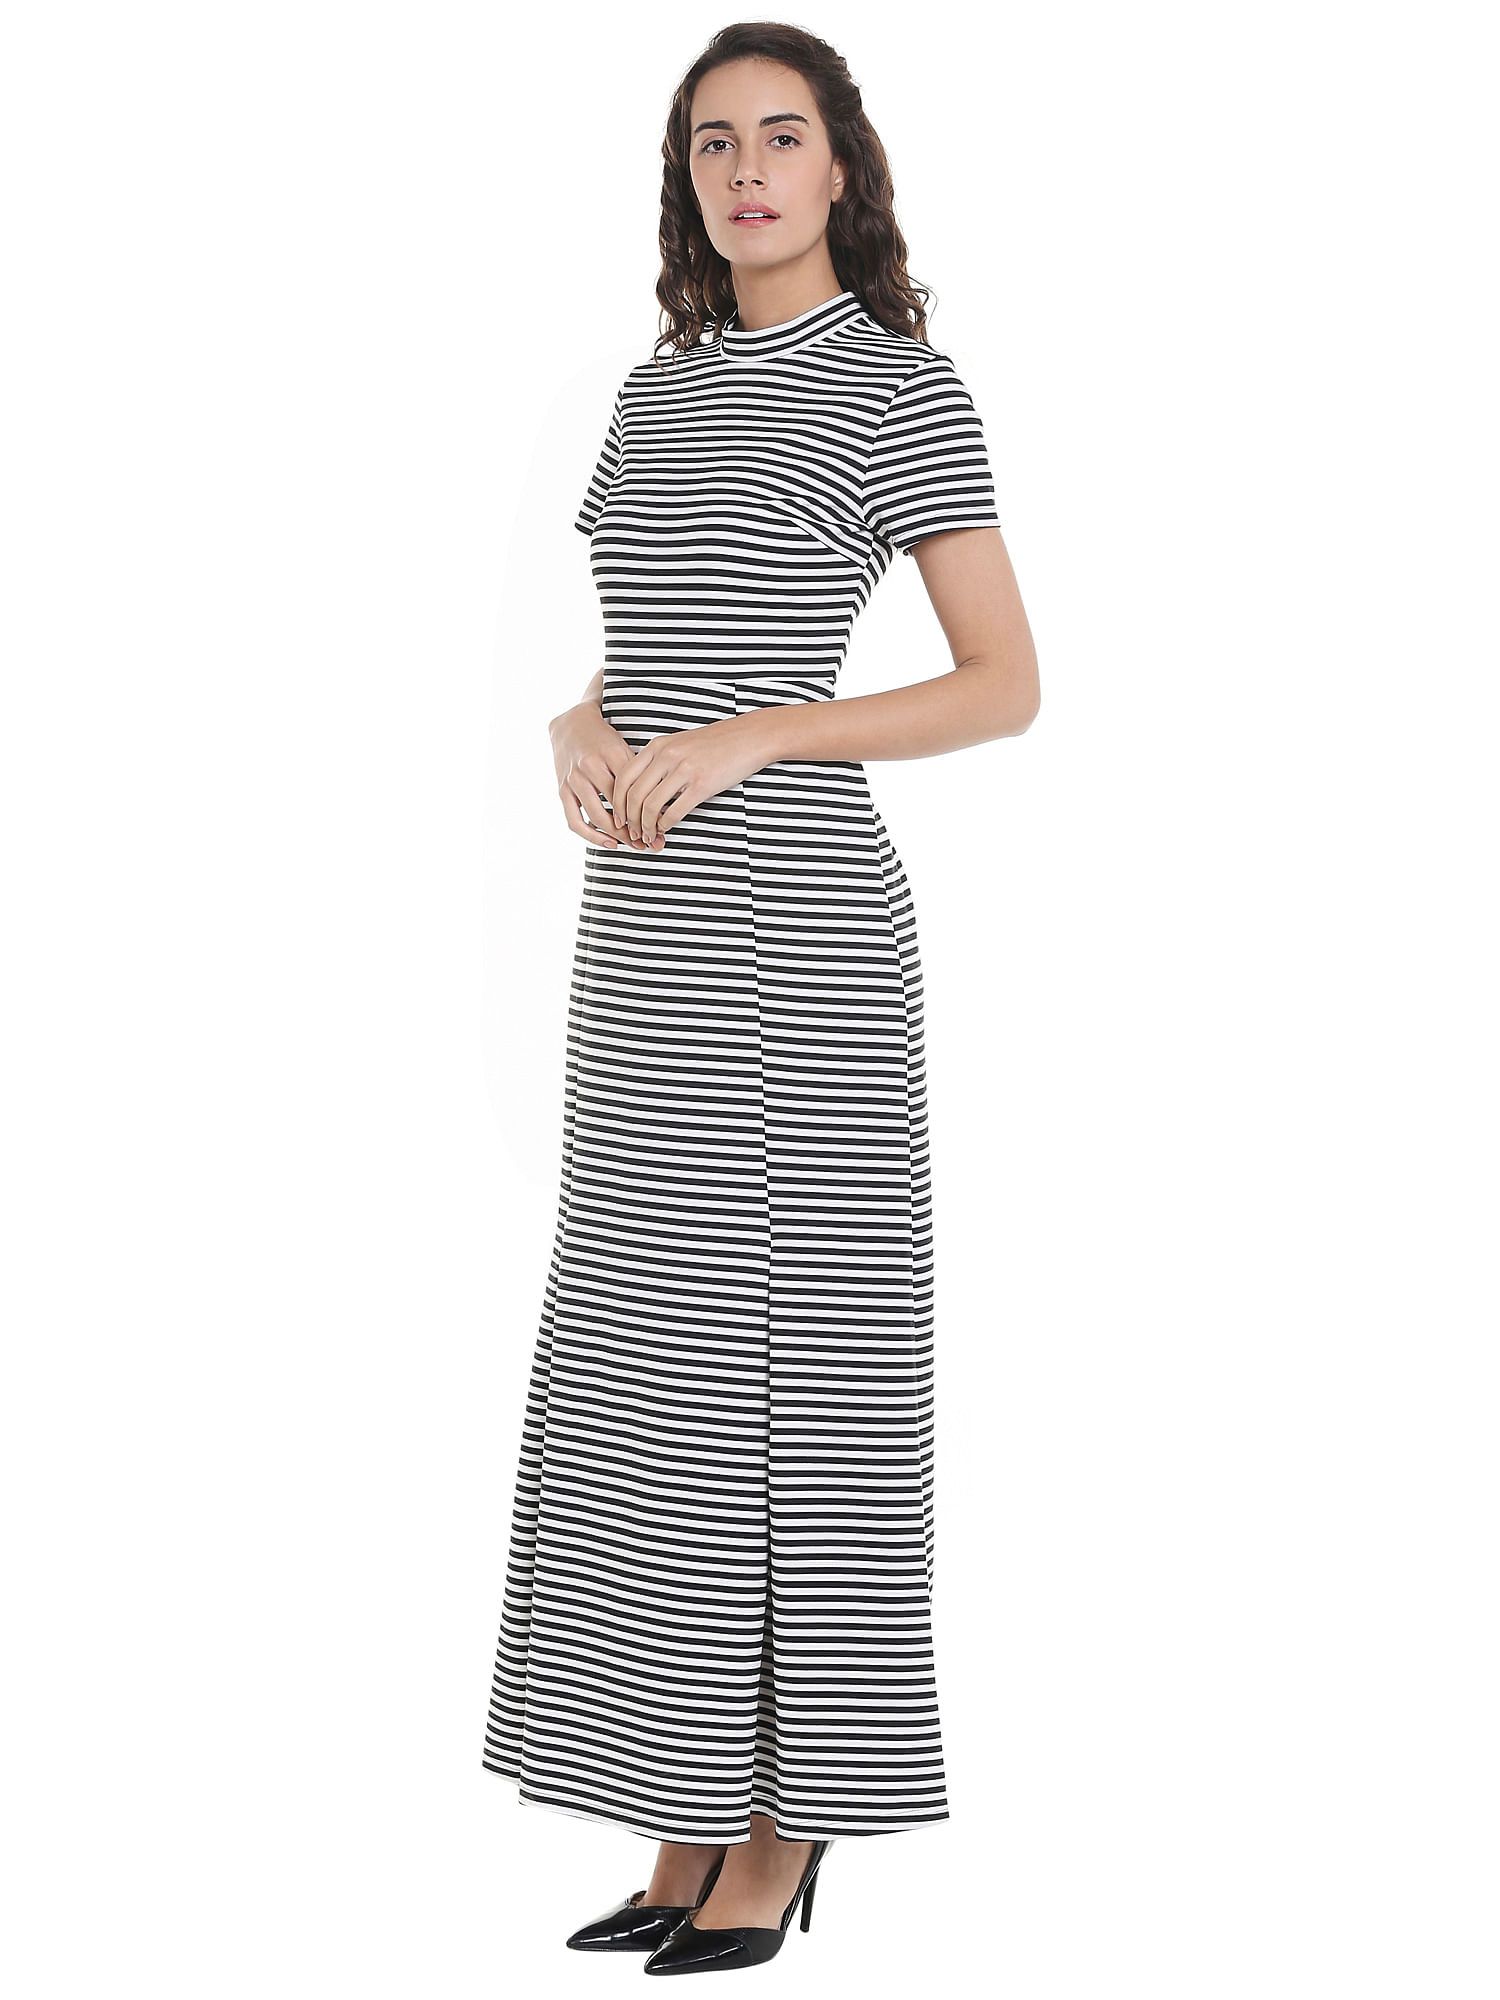 vero moda black and white striped dress